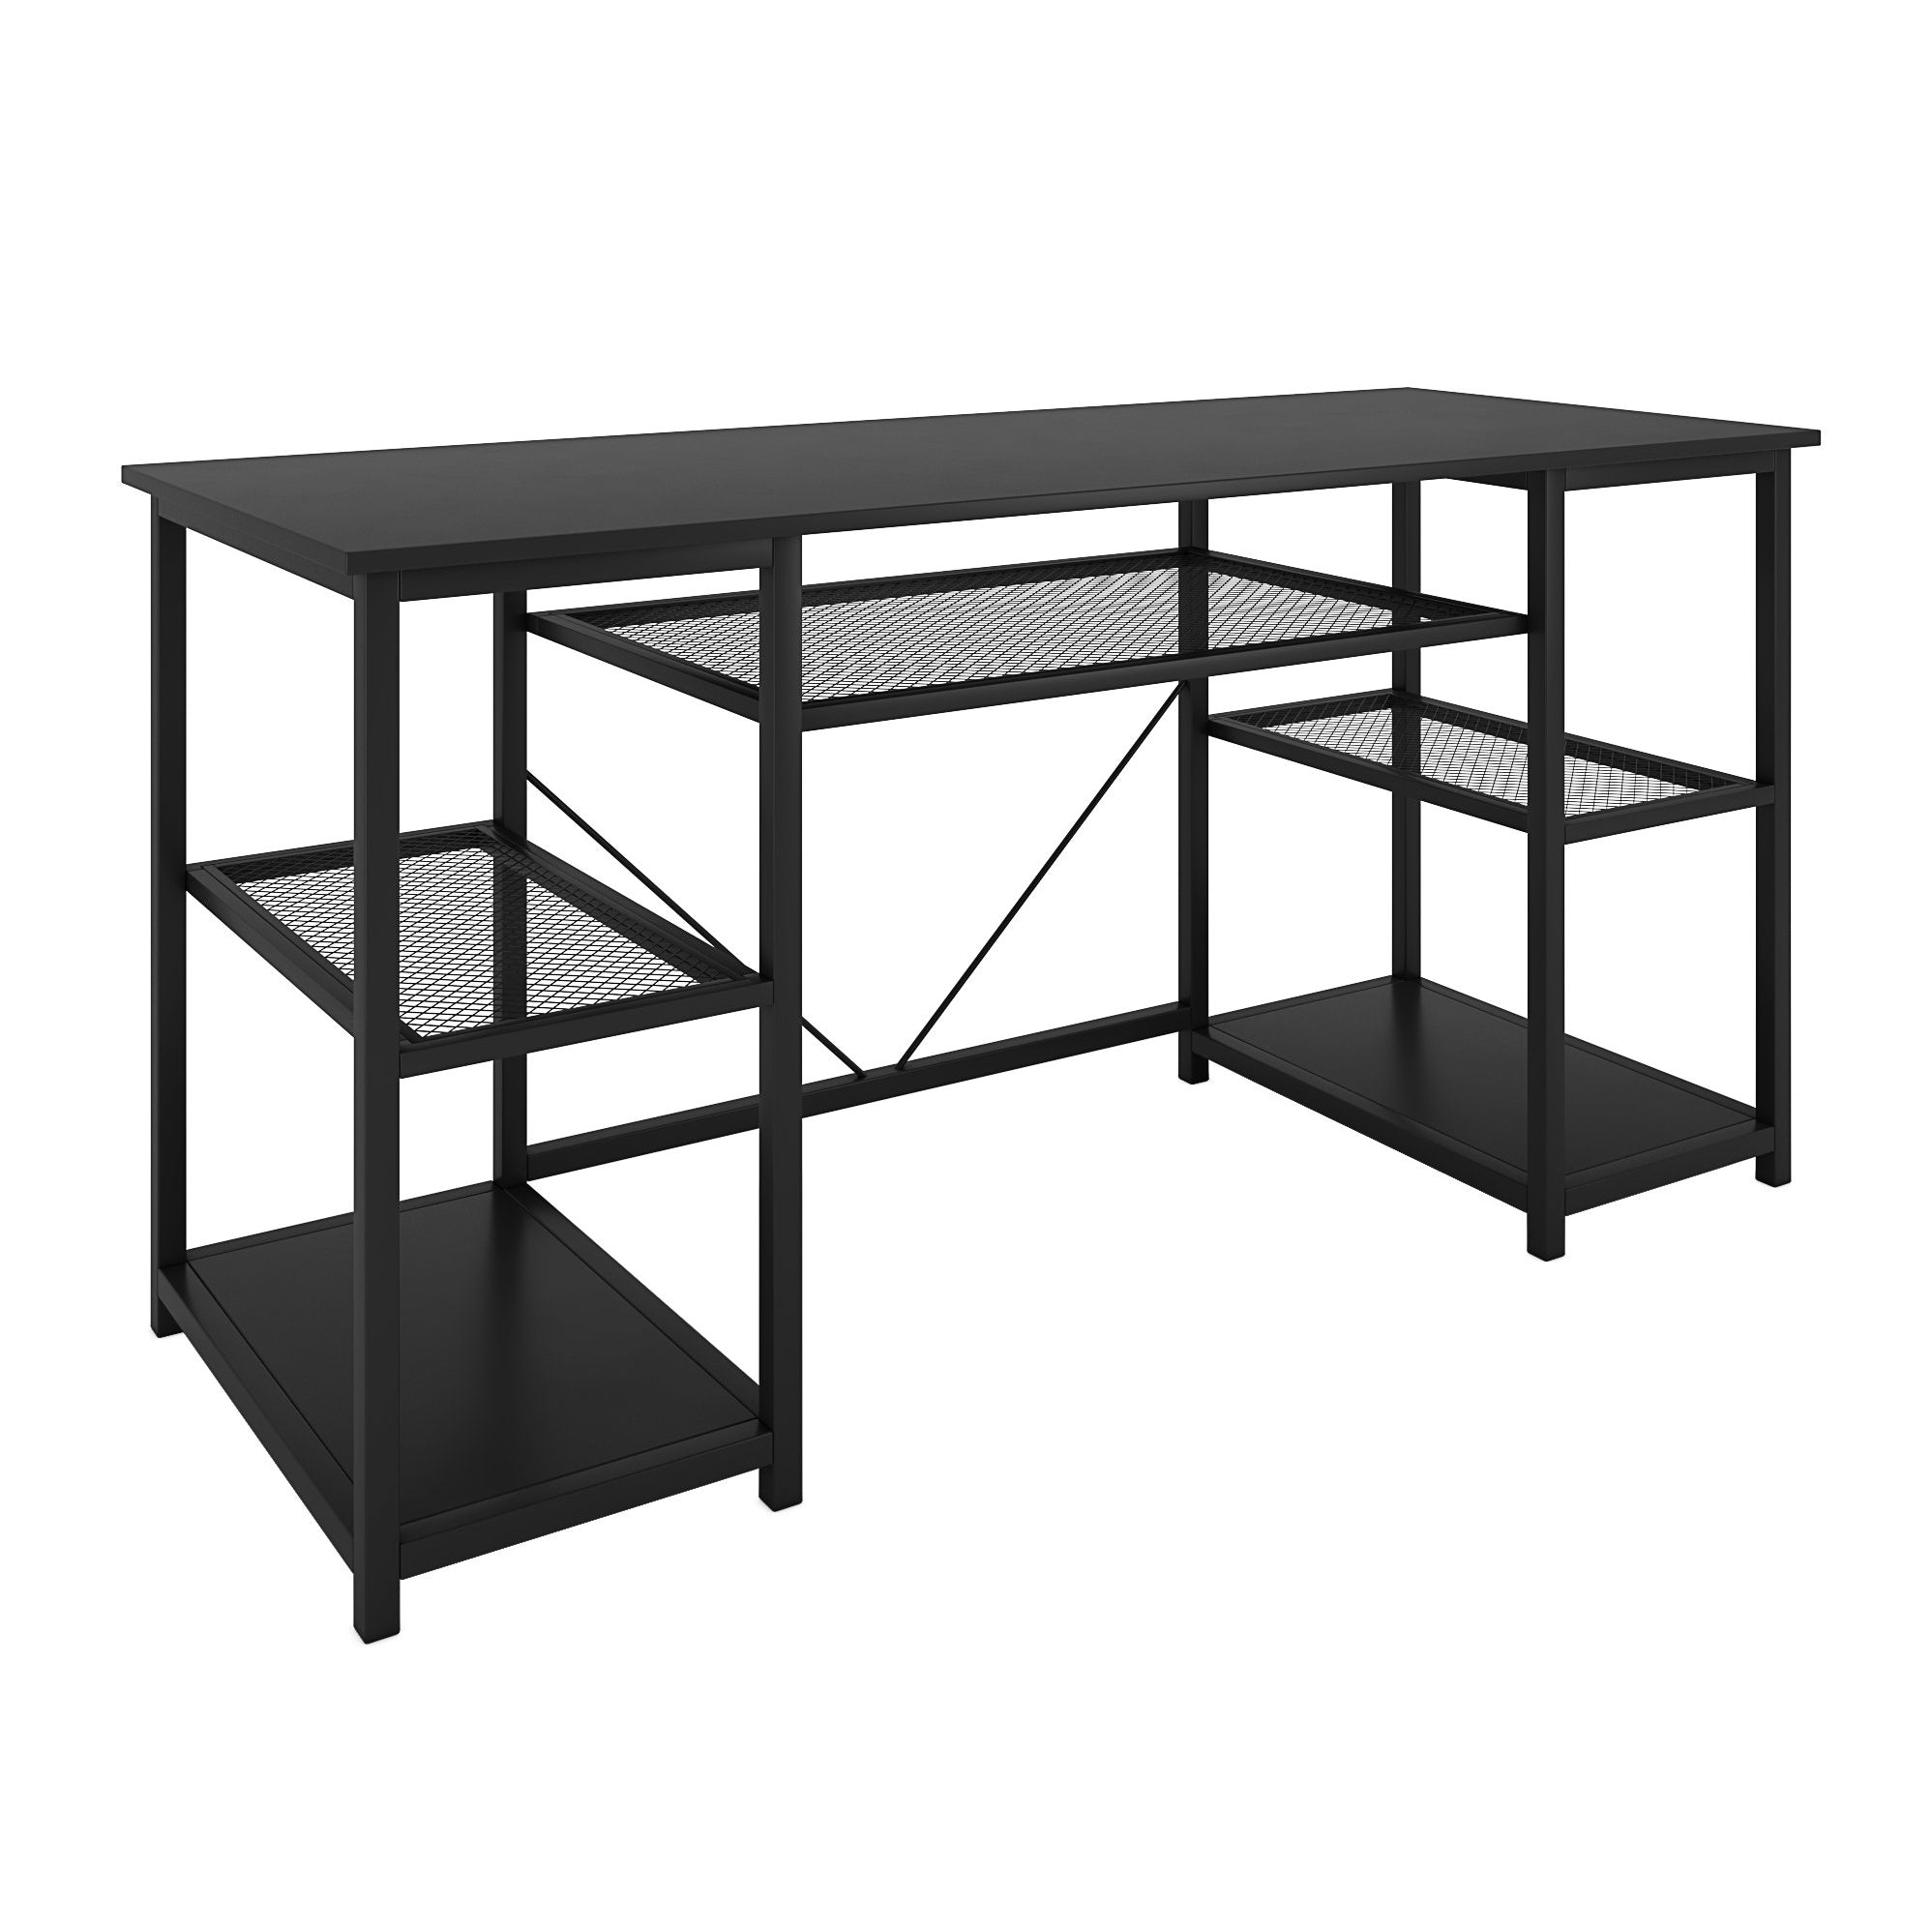 Nancy's Littleton Desk - Computer table - Office table - Storage space - Engineered Wood - Powder-coated Steel - Black - 150 x 50 x 75 cm